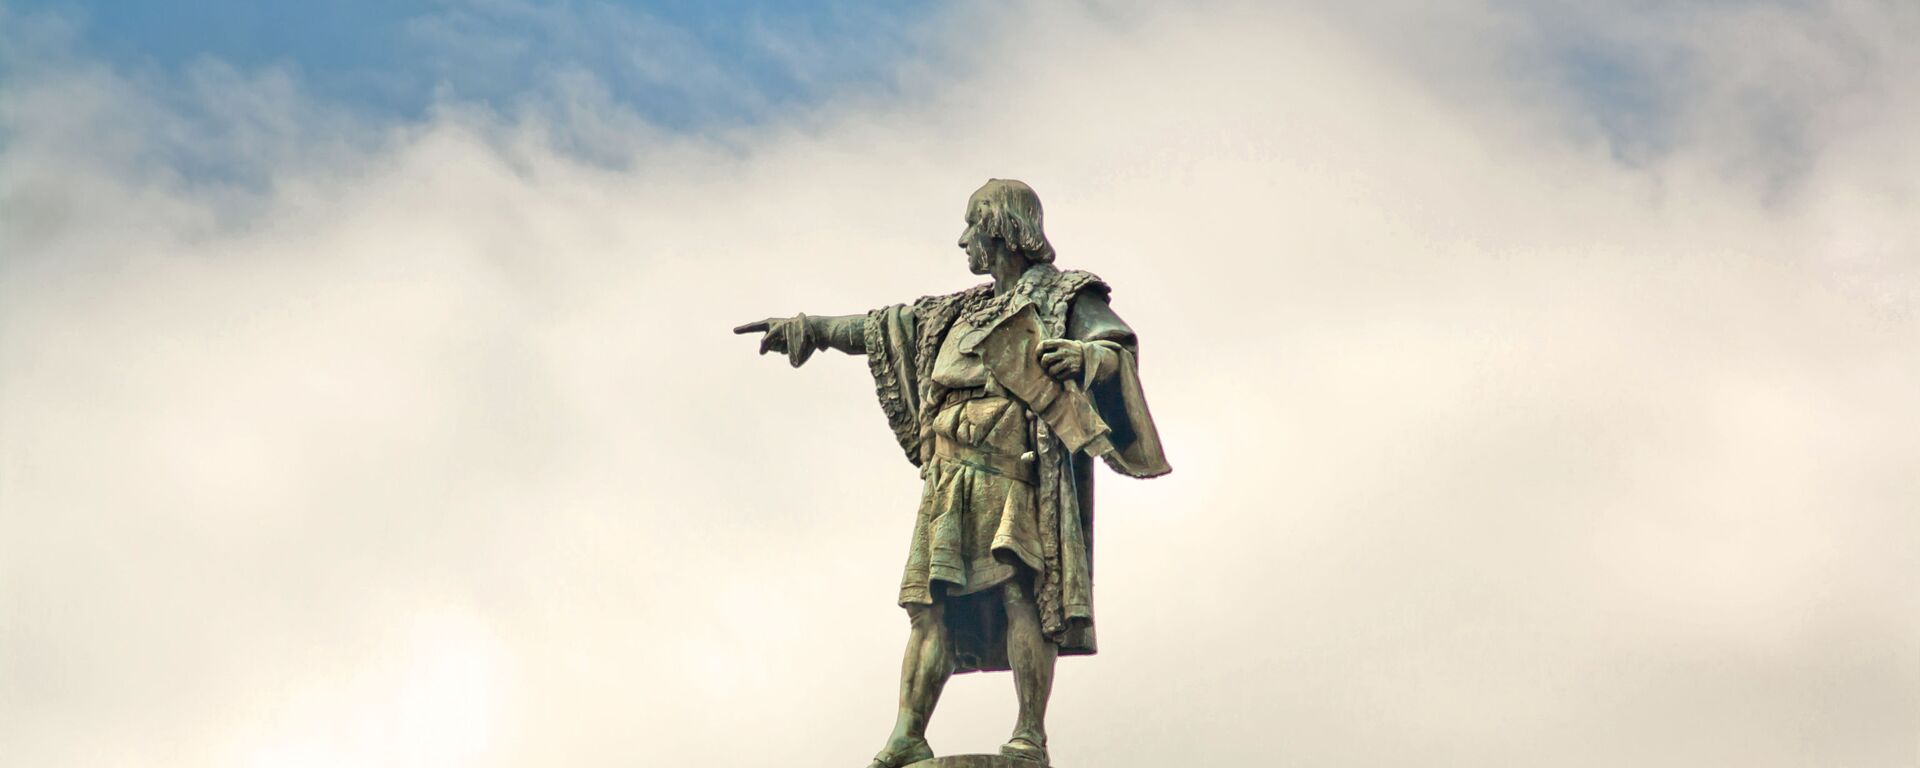 El monumento de Cristóbal Colón en Barcelona, España - Sputnik Mundo, 1920, 20.12.2018